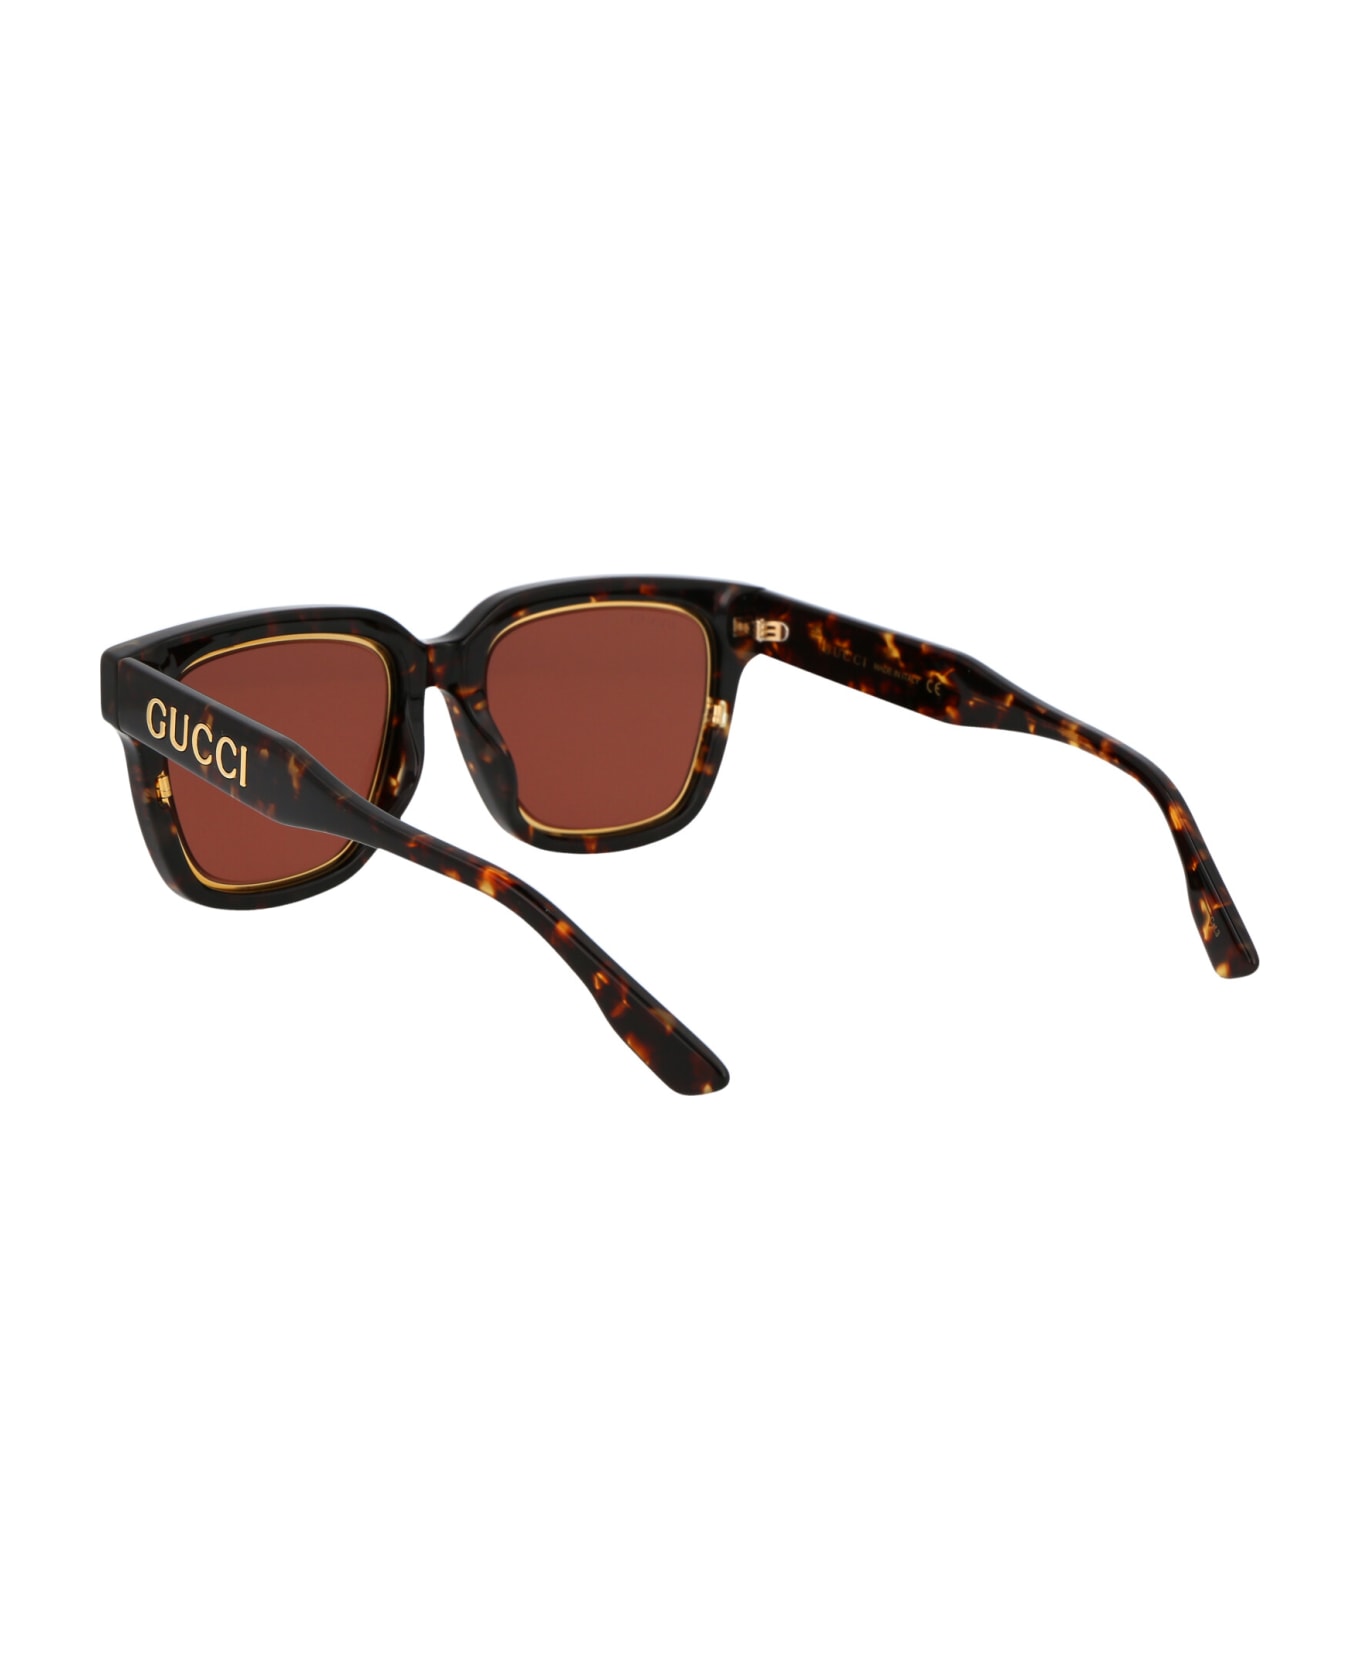 Gucci Eyewear Gg1136sa Sunglasses - 002 HAVANA HAVANA BROWN